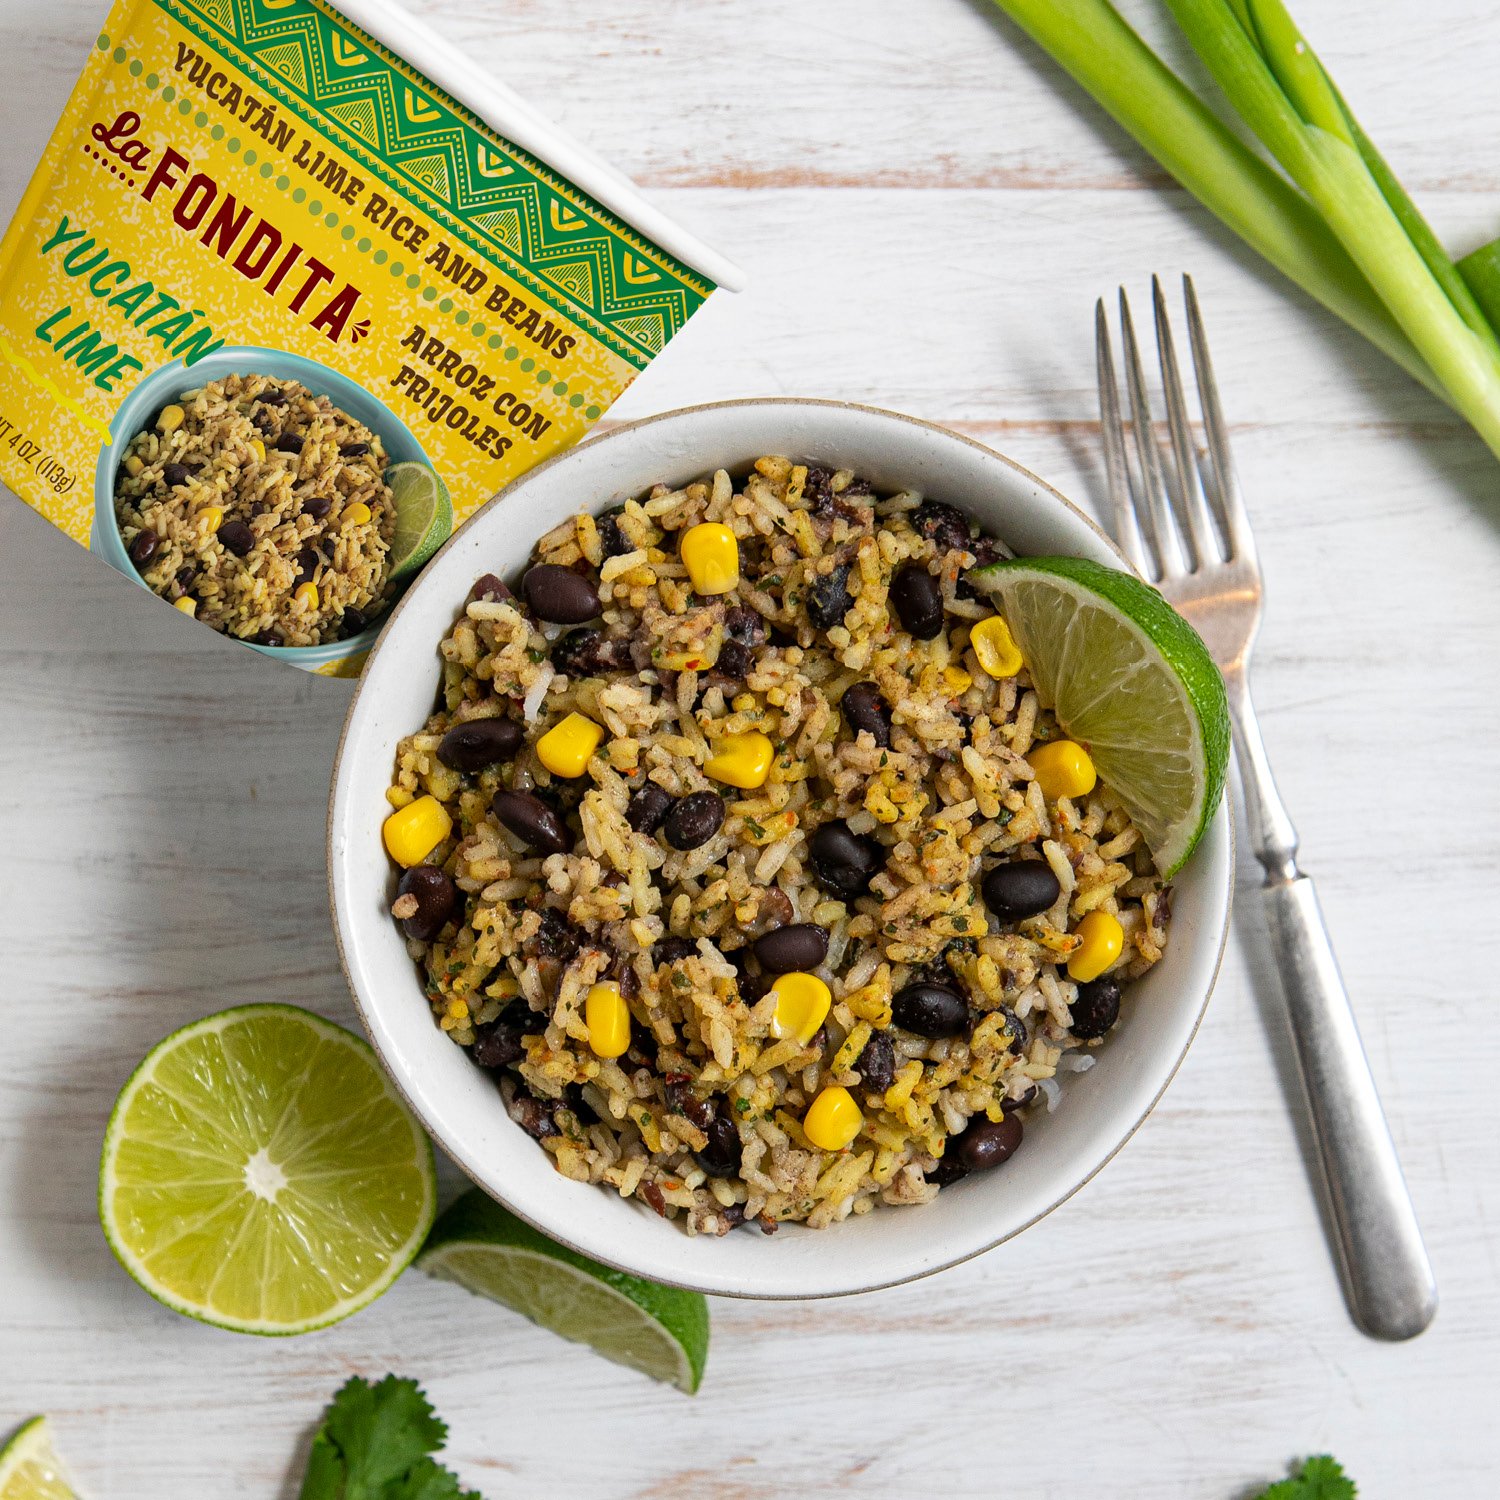 La Fondita Yucatan Lime Rice and Beans Bowl Packaging